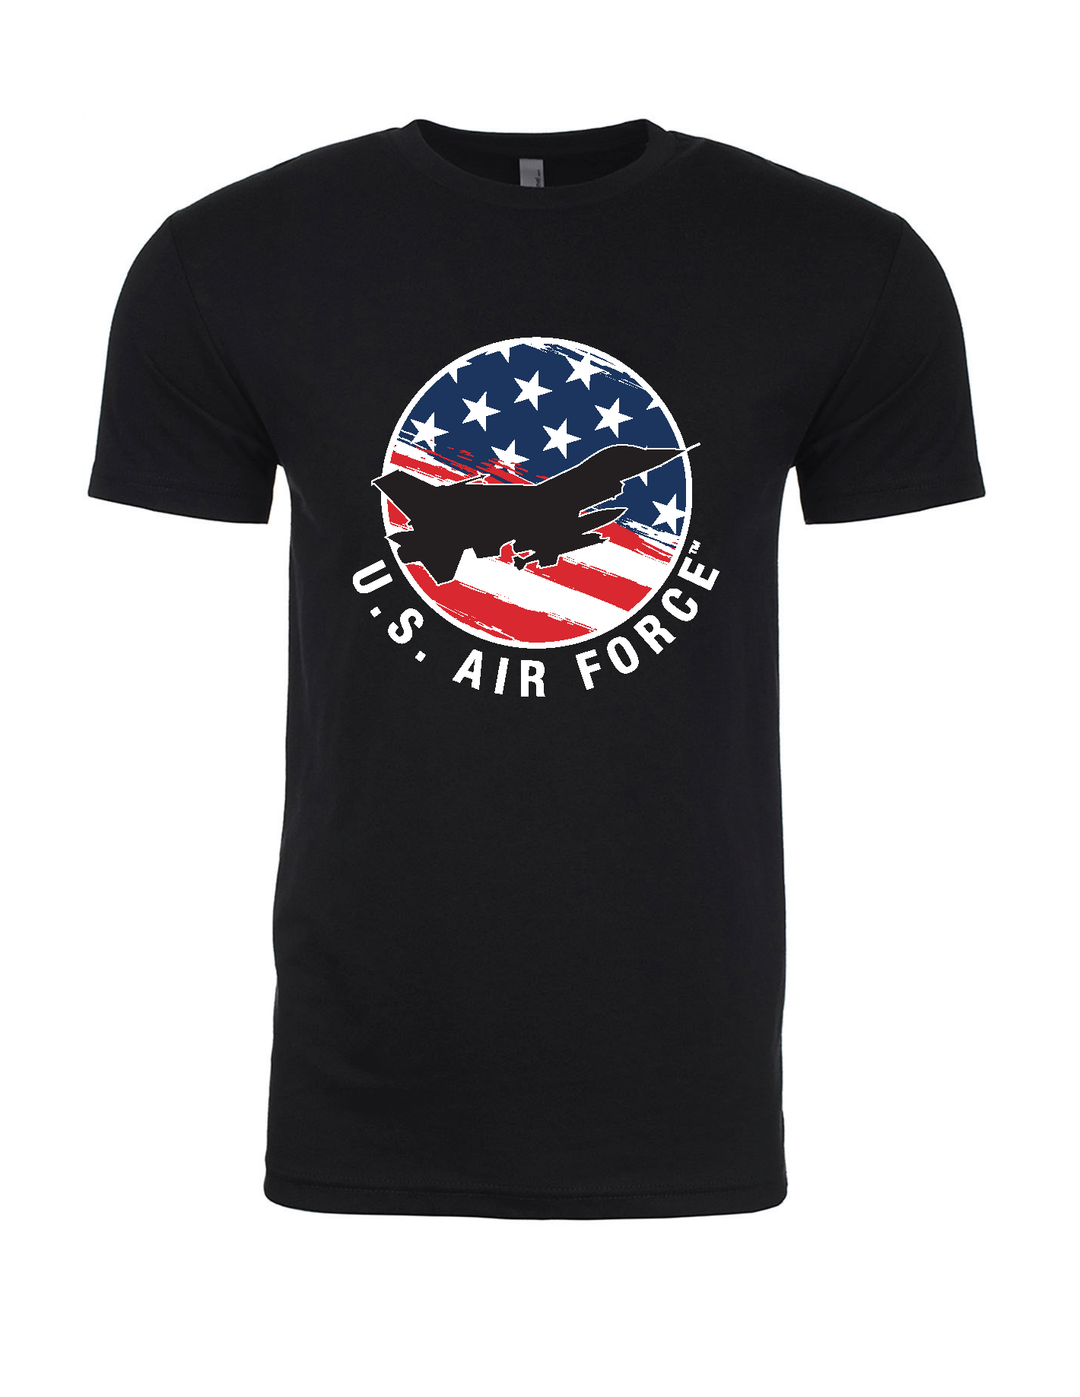 U.S. Air Force Jet T-Shirt (Black)